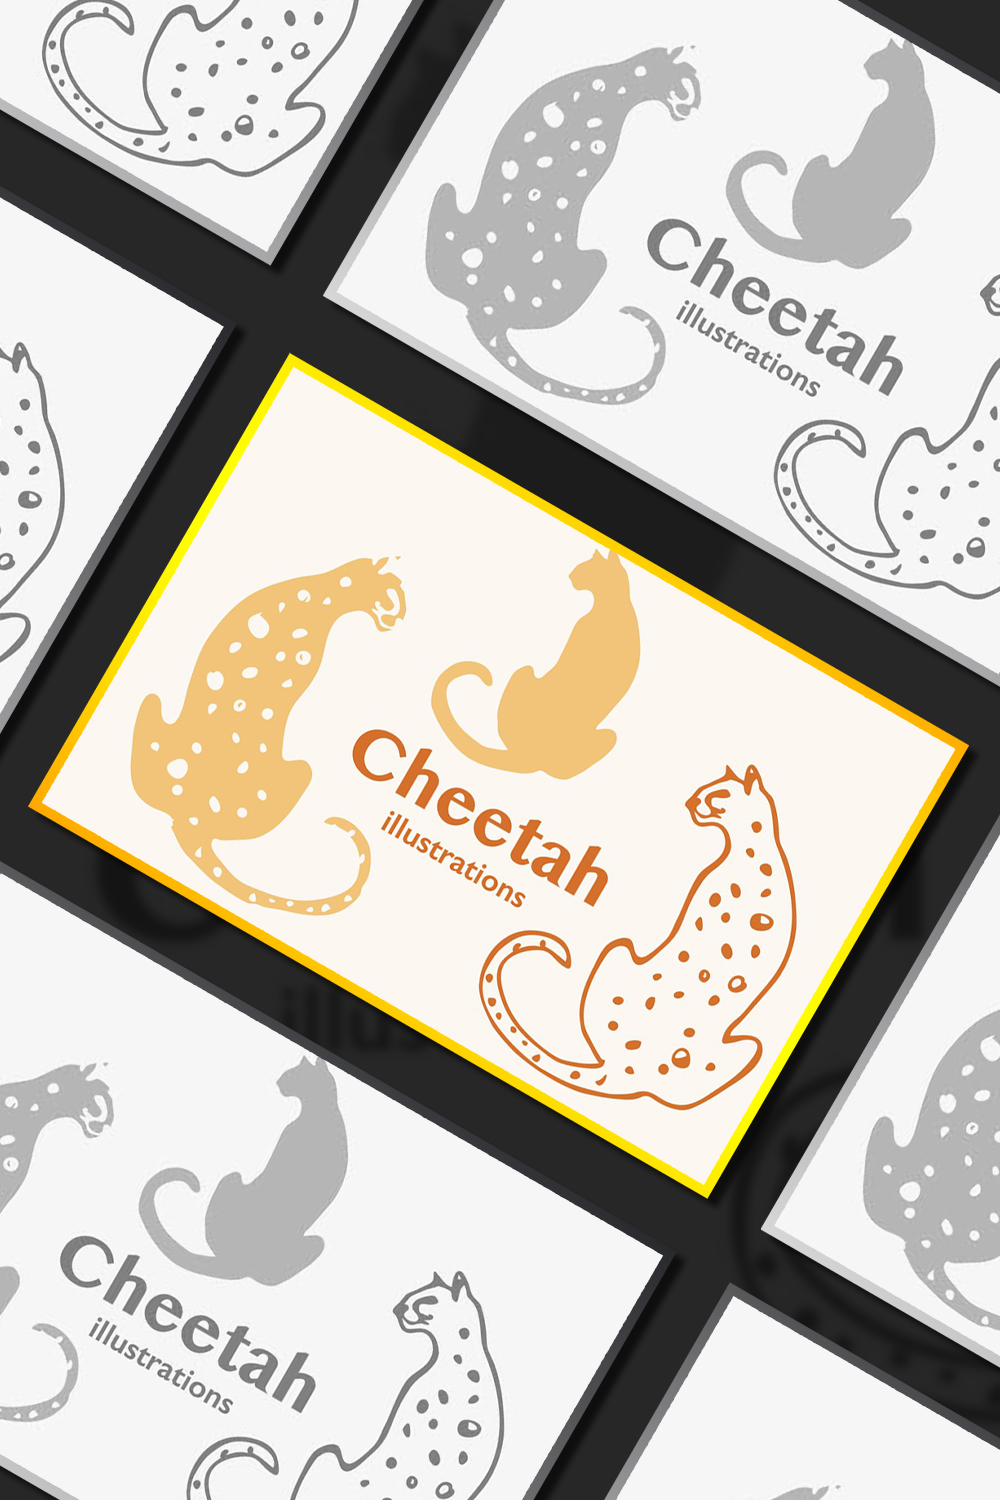 Cheetah Vector Illustrations - Pinterest.